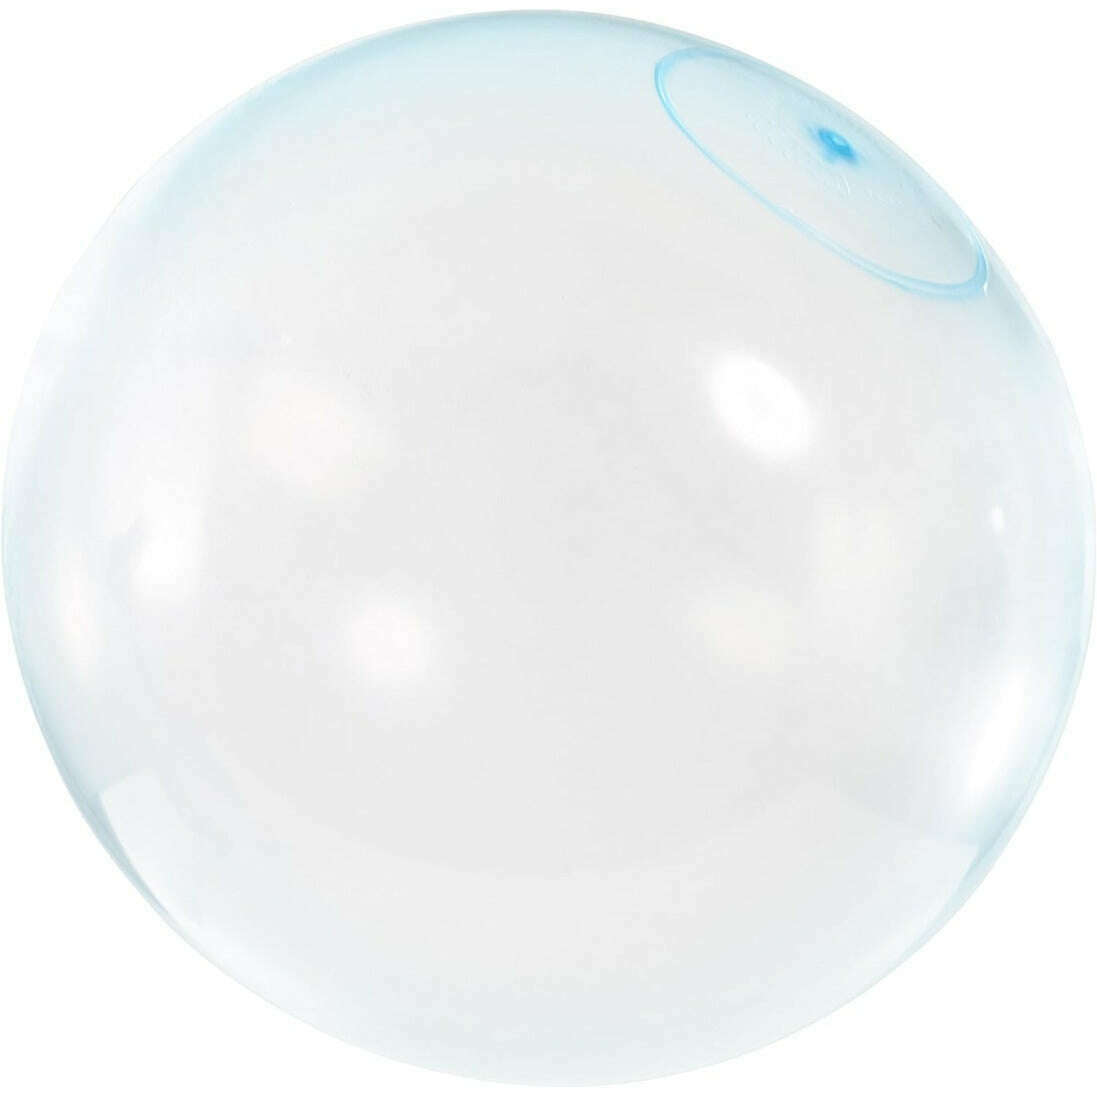 Toys N Tuck:Super Wubble Bubble Ball,Super Wubble